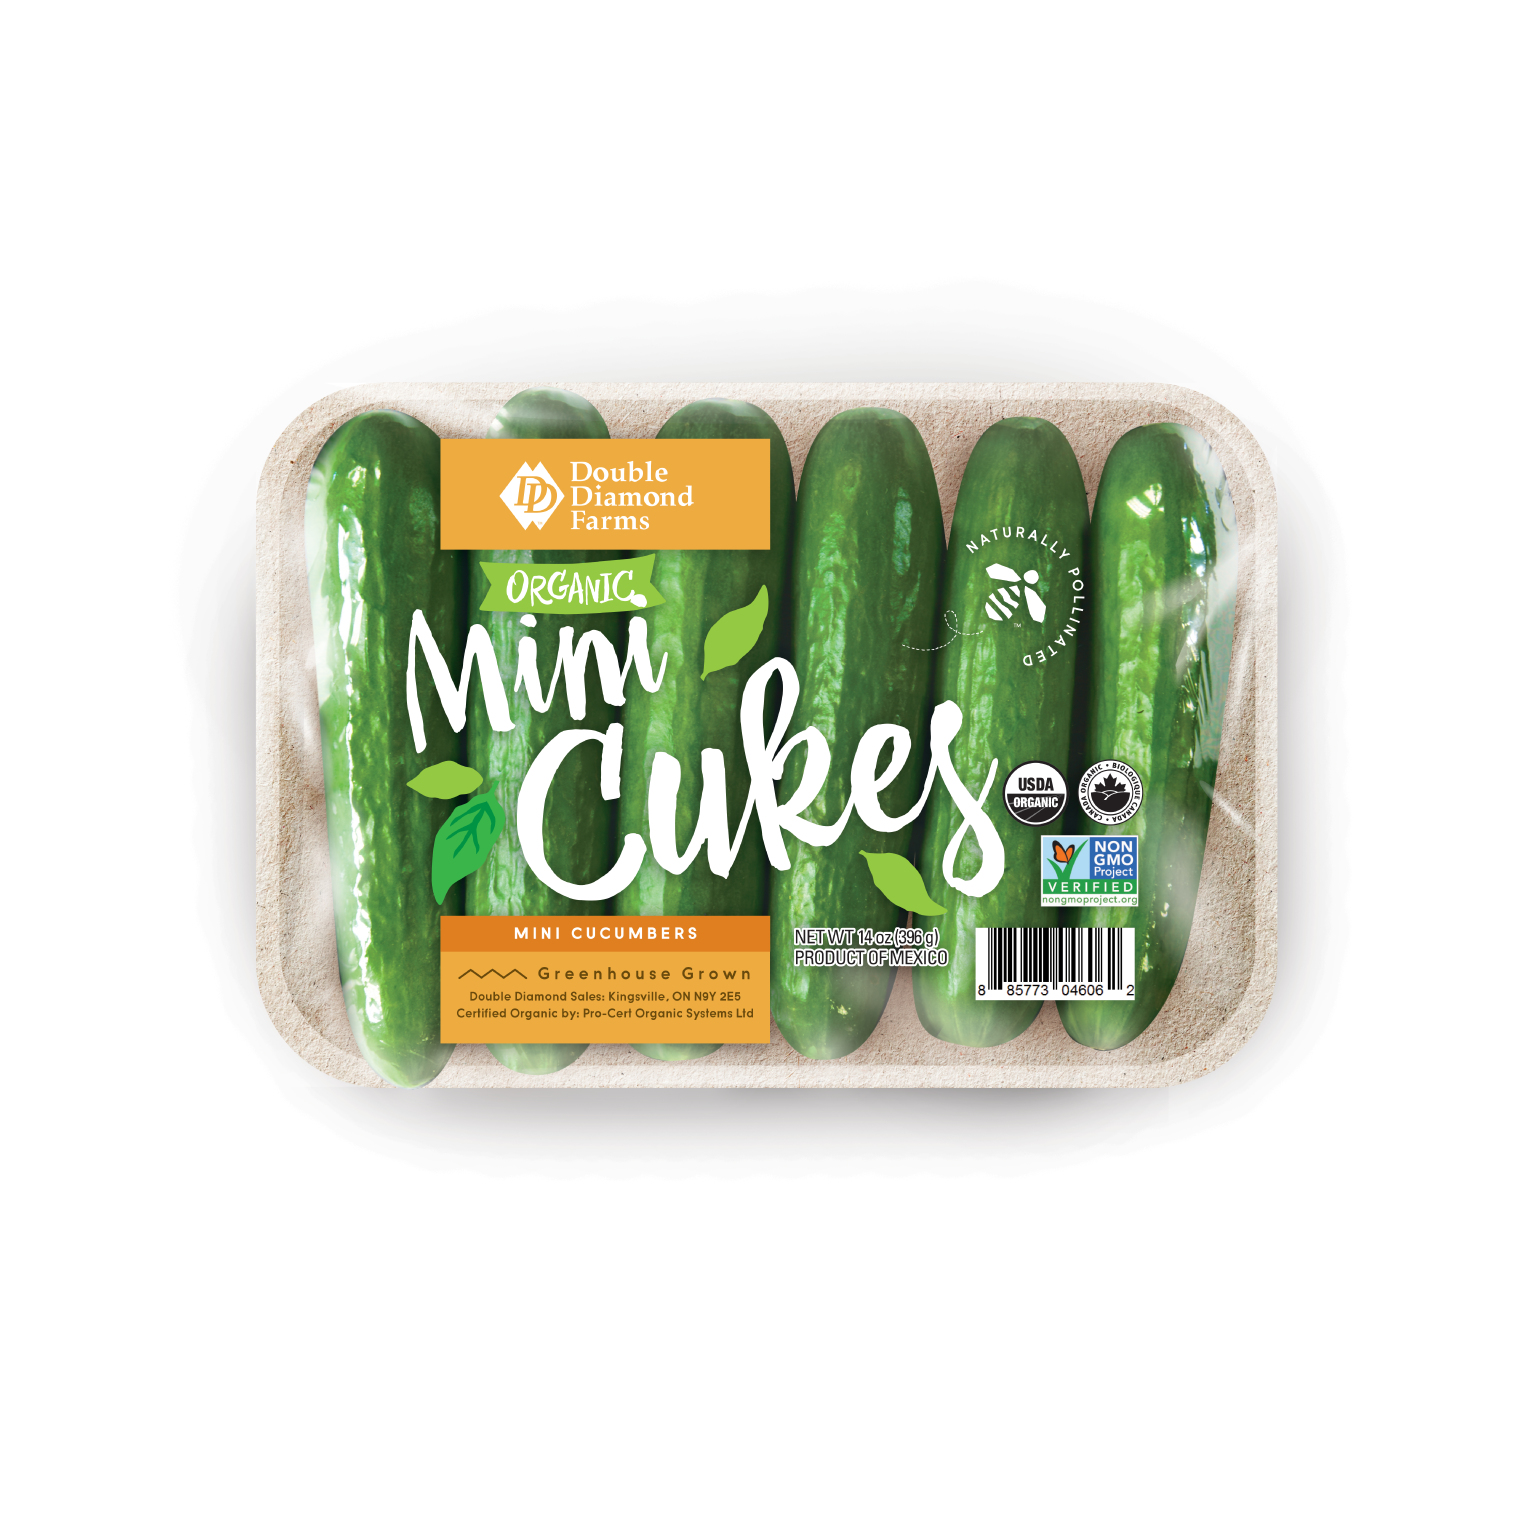 Signature Select/Farms Cucumbers Mini - 32 Oz - Vons